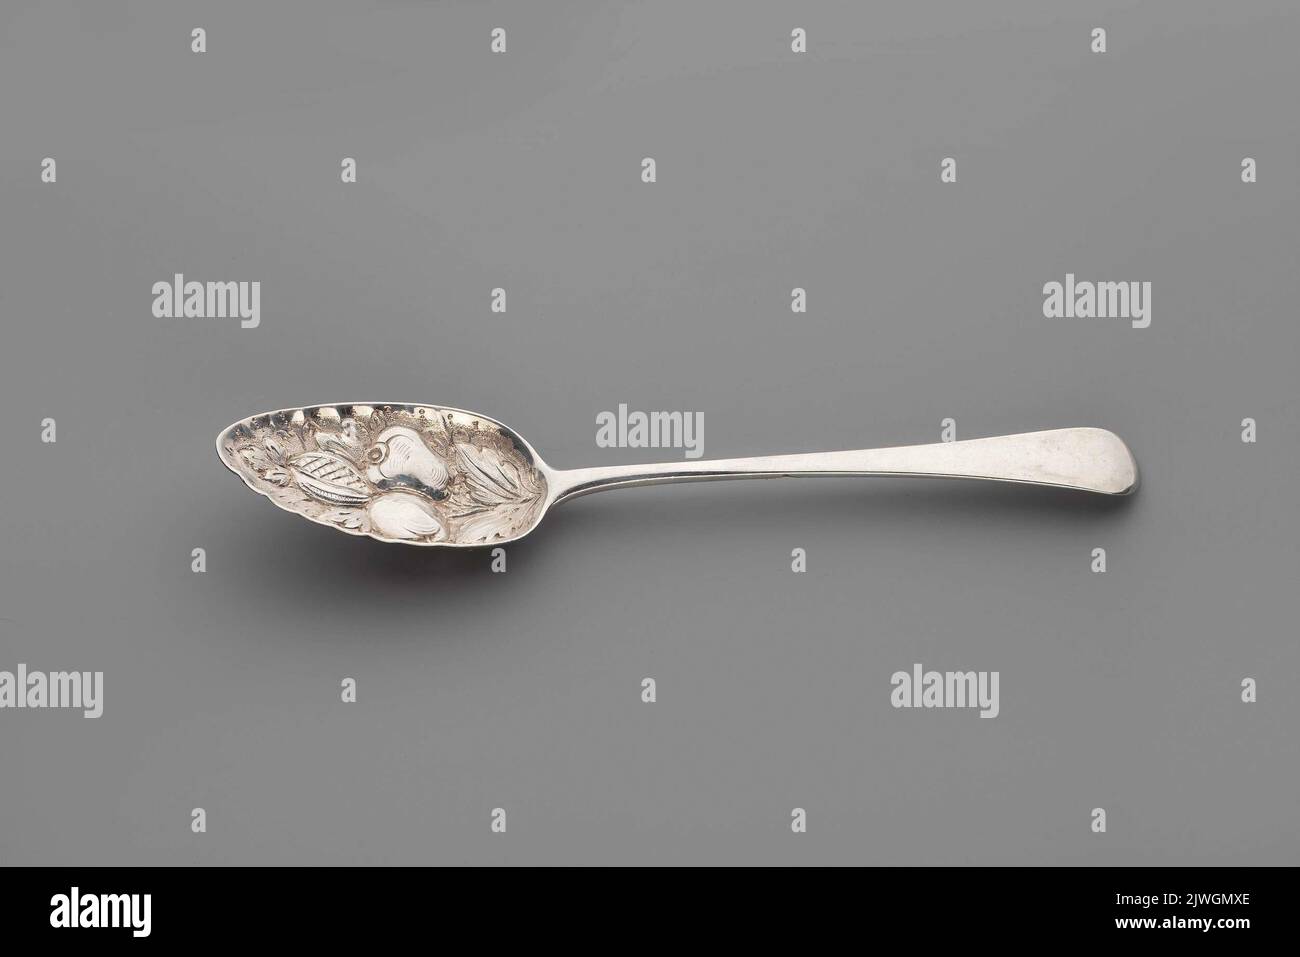 Jam spoon. Adams, Stephen I (fl. ca 1758-1802), goldsmith Stock Photo